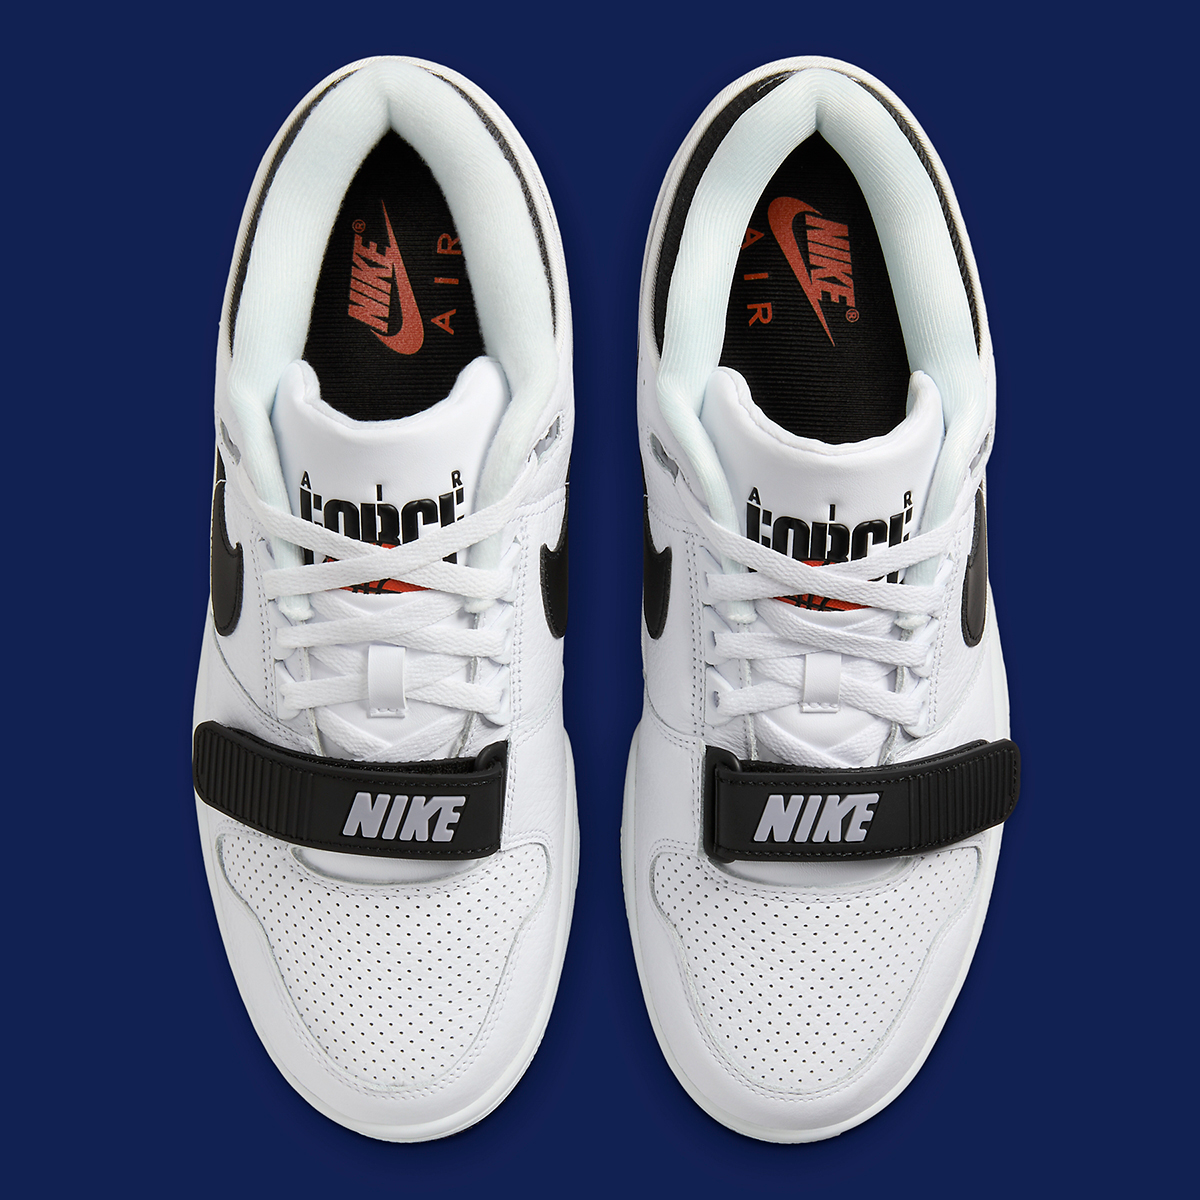 Nike wedge Nike wedge air presto tech fleece price chart White Black Midnight Navy Sail Fq8183 100 6